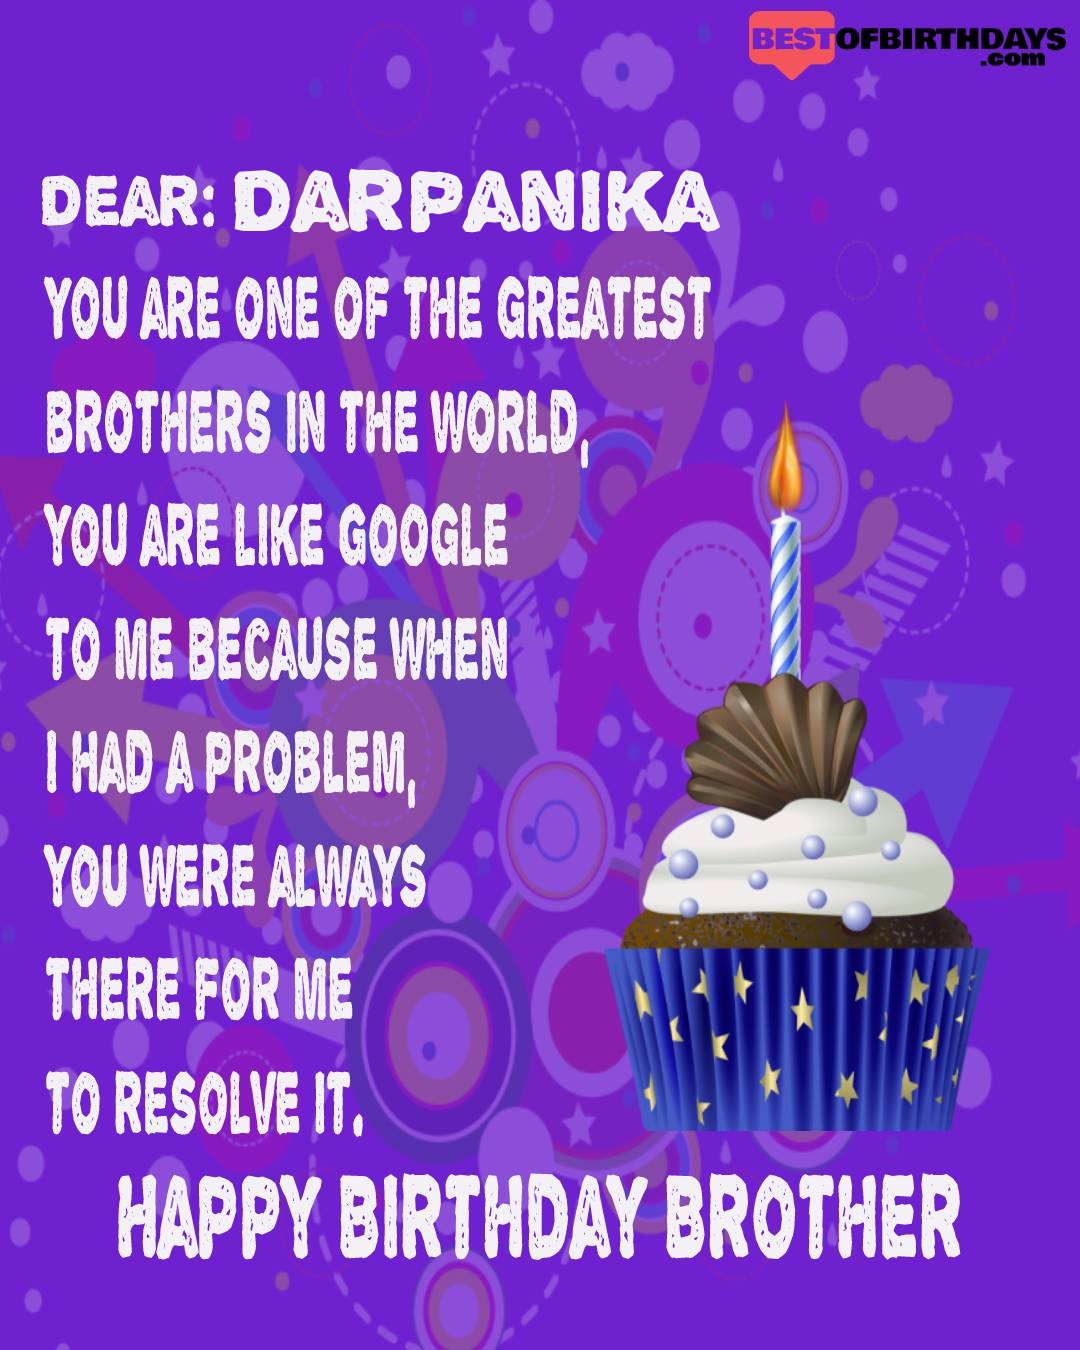 Happy birthday darpanika bhai brother bro